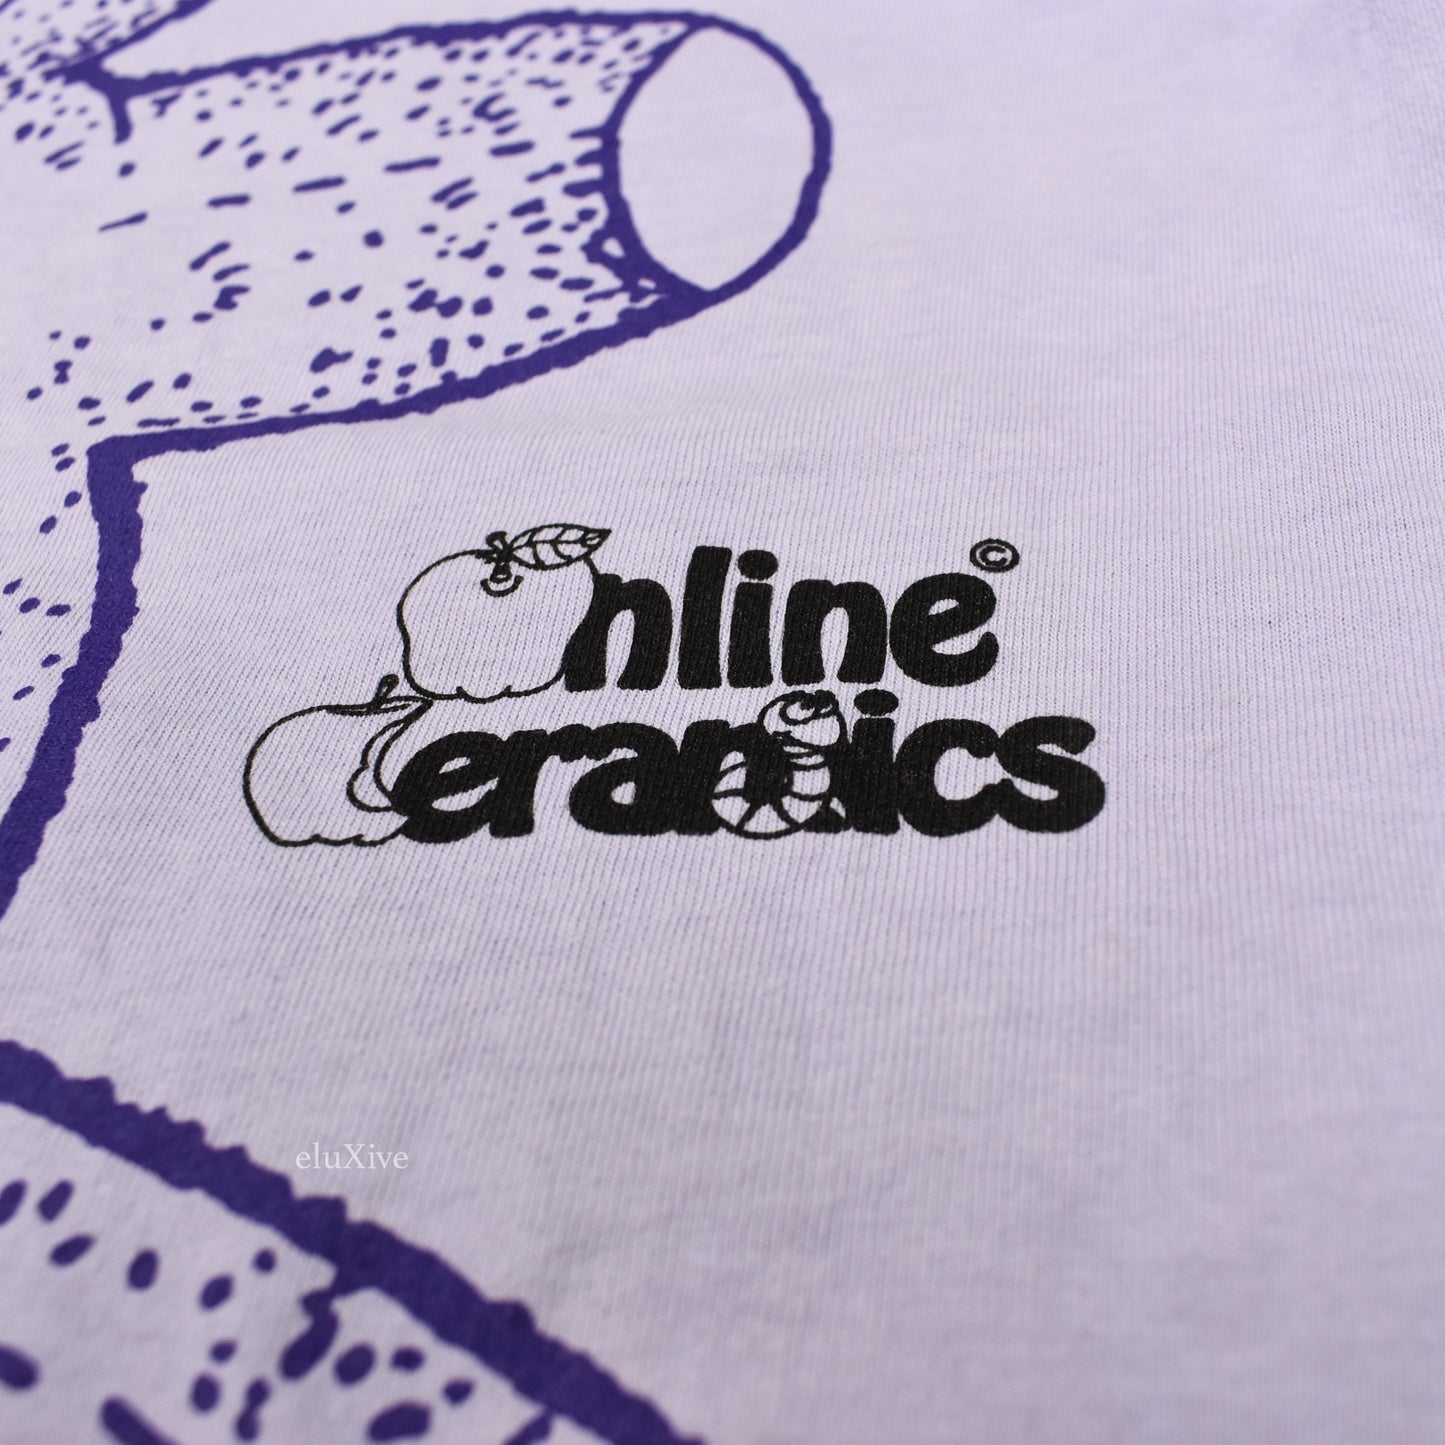 Online Ceramics - Look In The Mirror Bear T-Shirt (Purple)